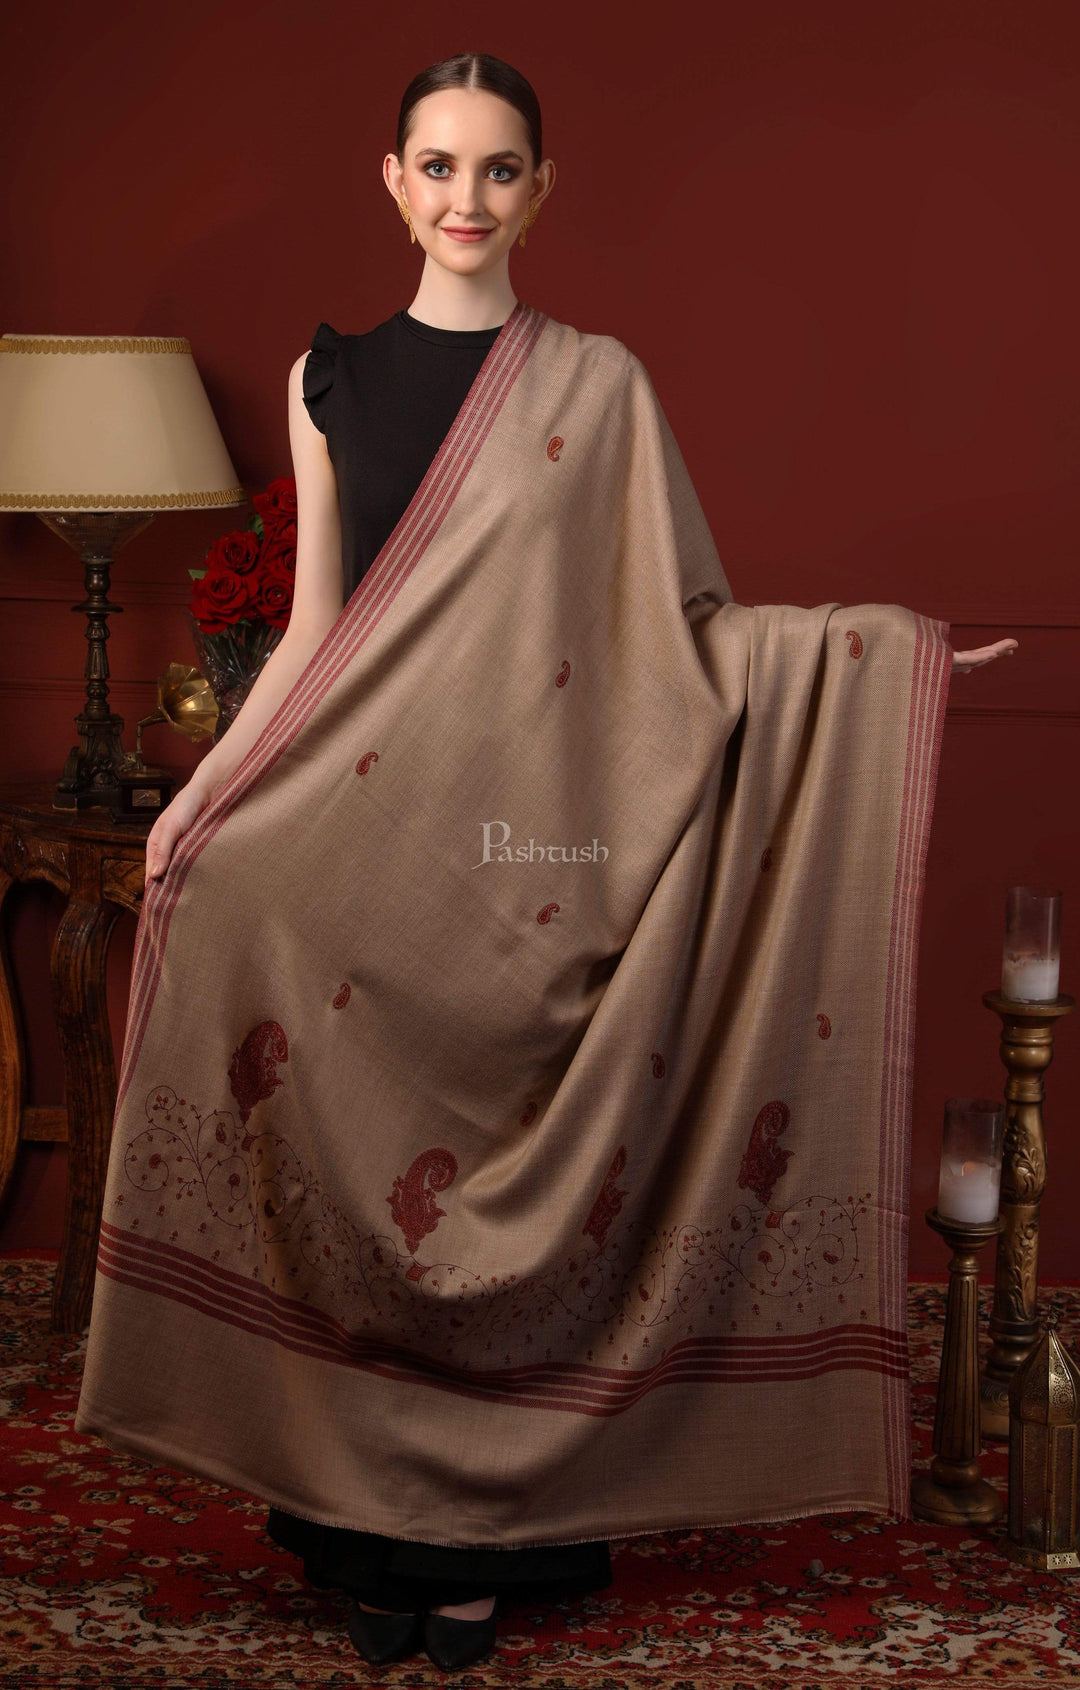 Pashtush India 114x228 Pashtush Womens Kashmiri Embroidery Shawl, Large and Warm